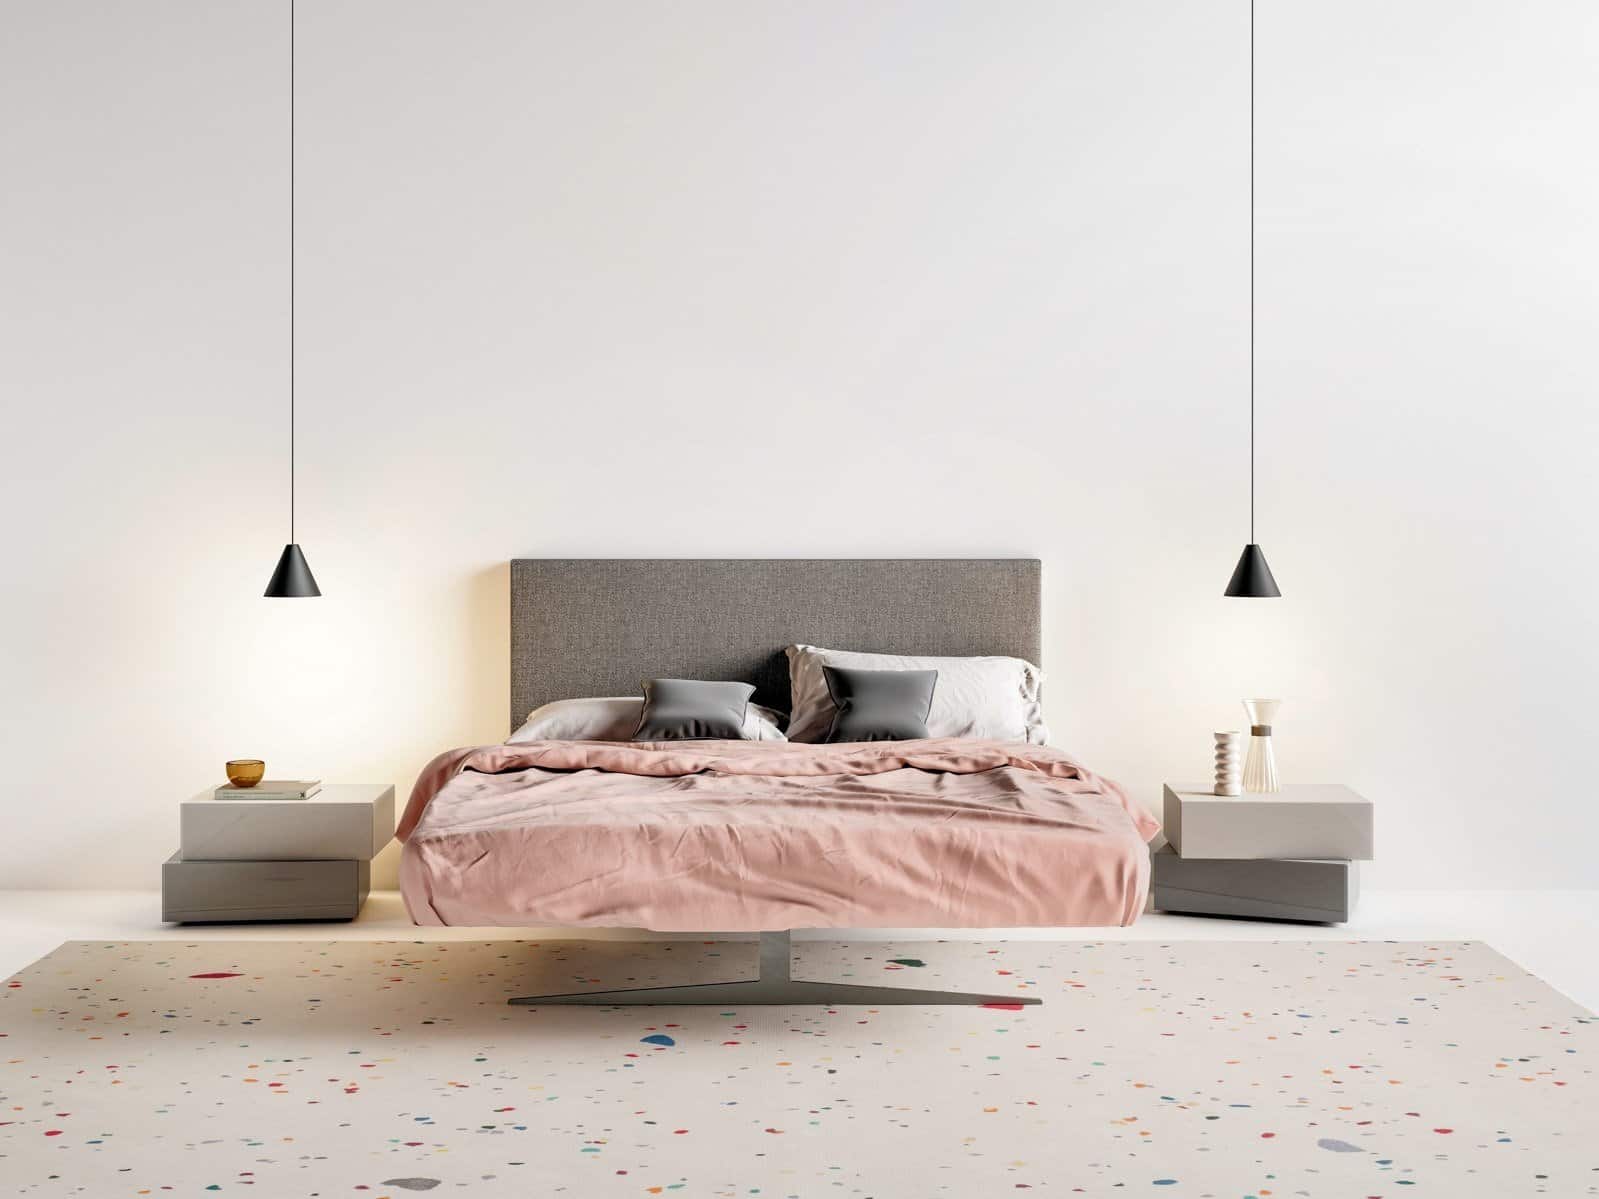 Steel designer bed by Daniele Lago